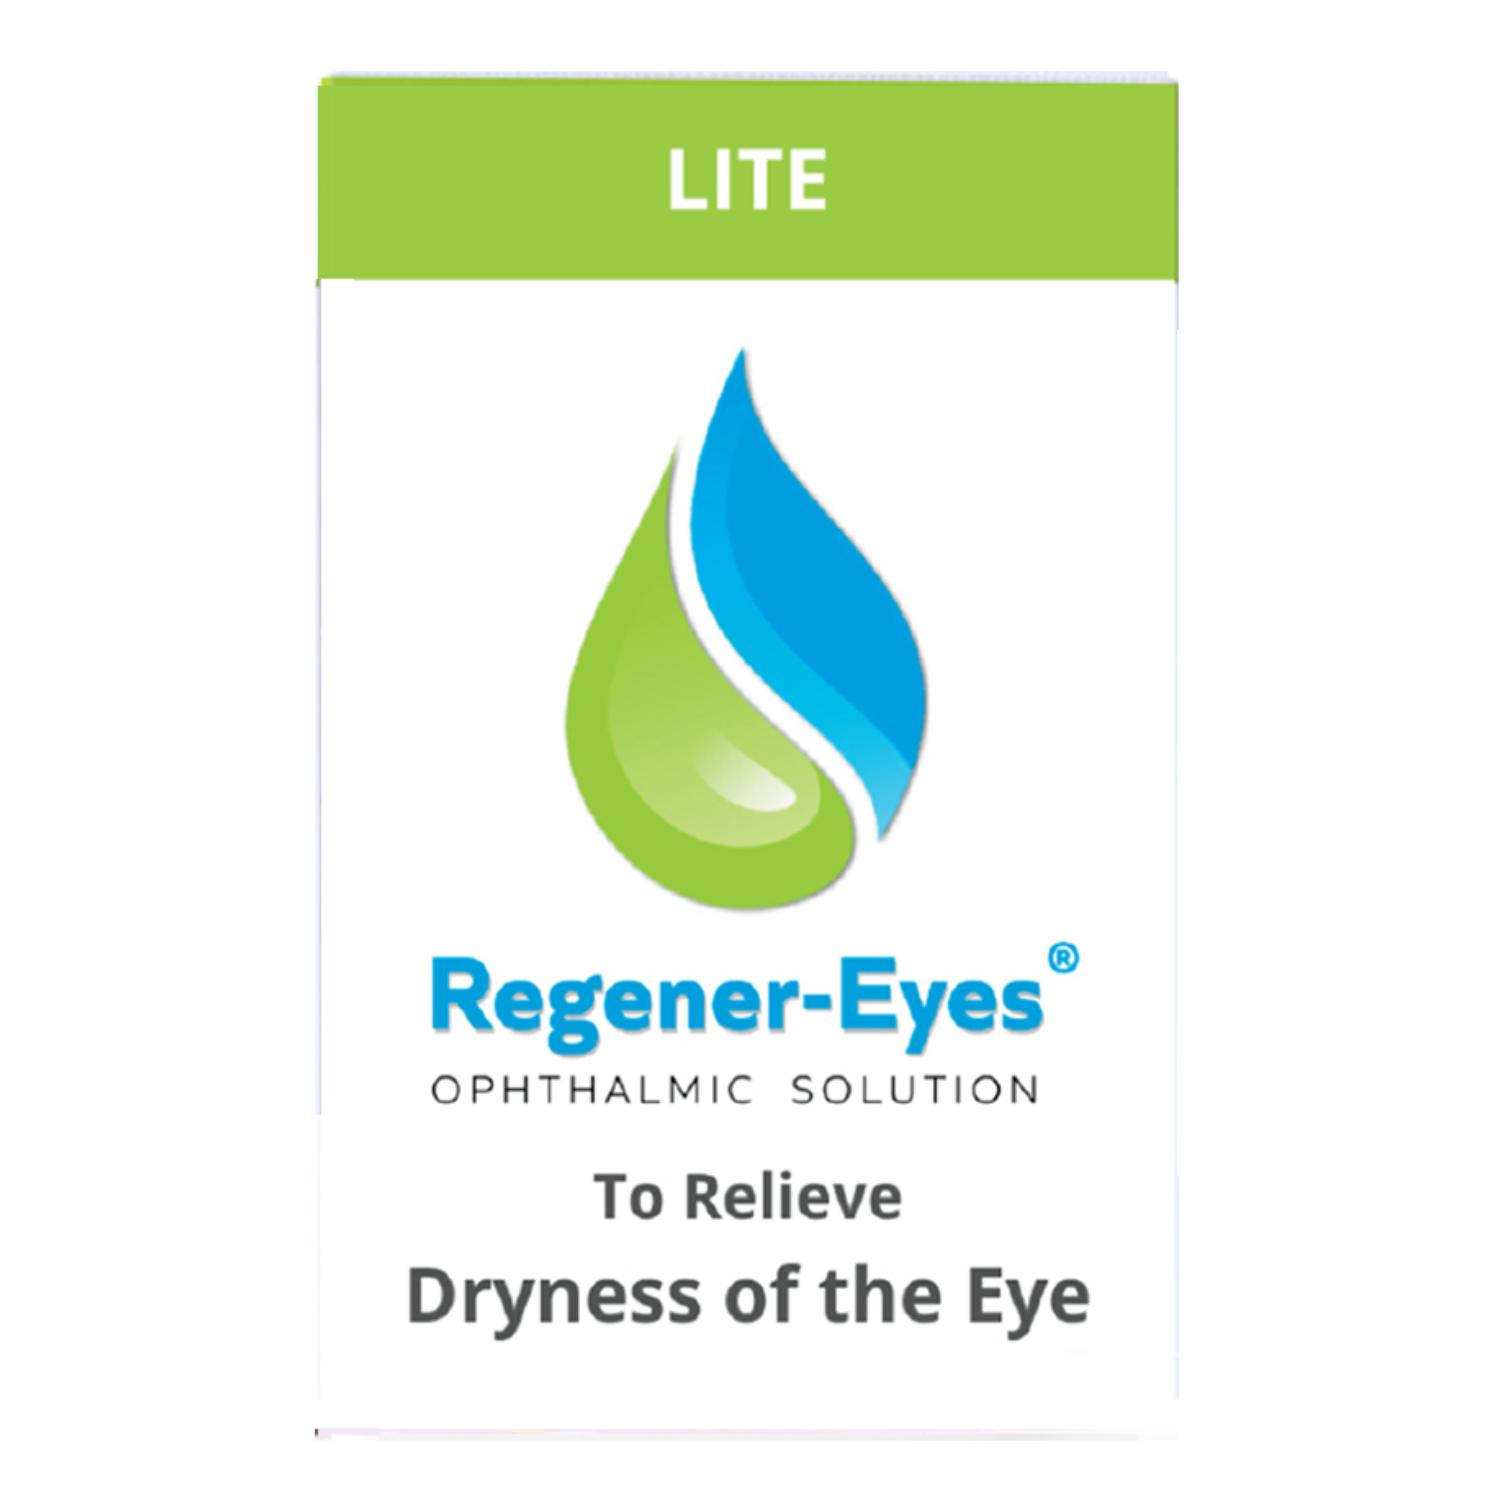 Regener-Eyes Ophthalmic Solution Lite